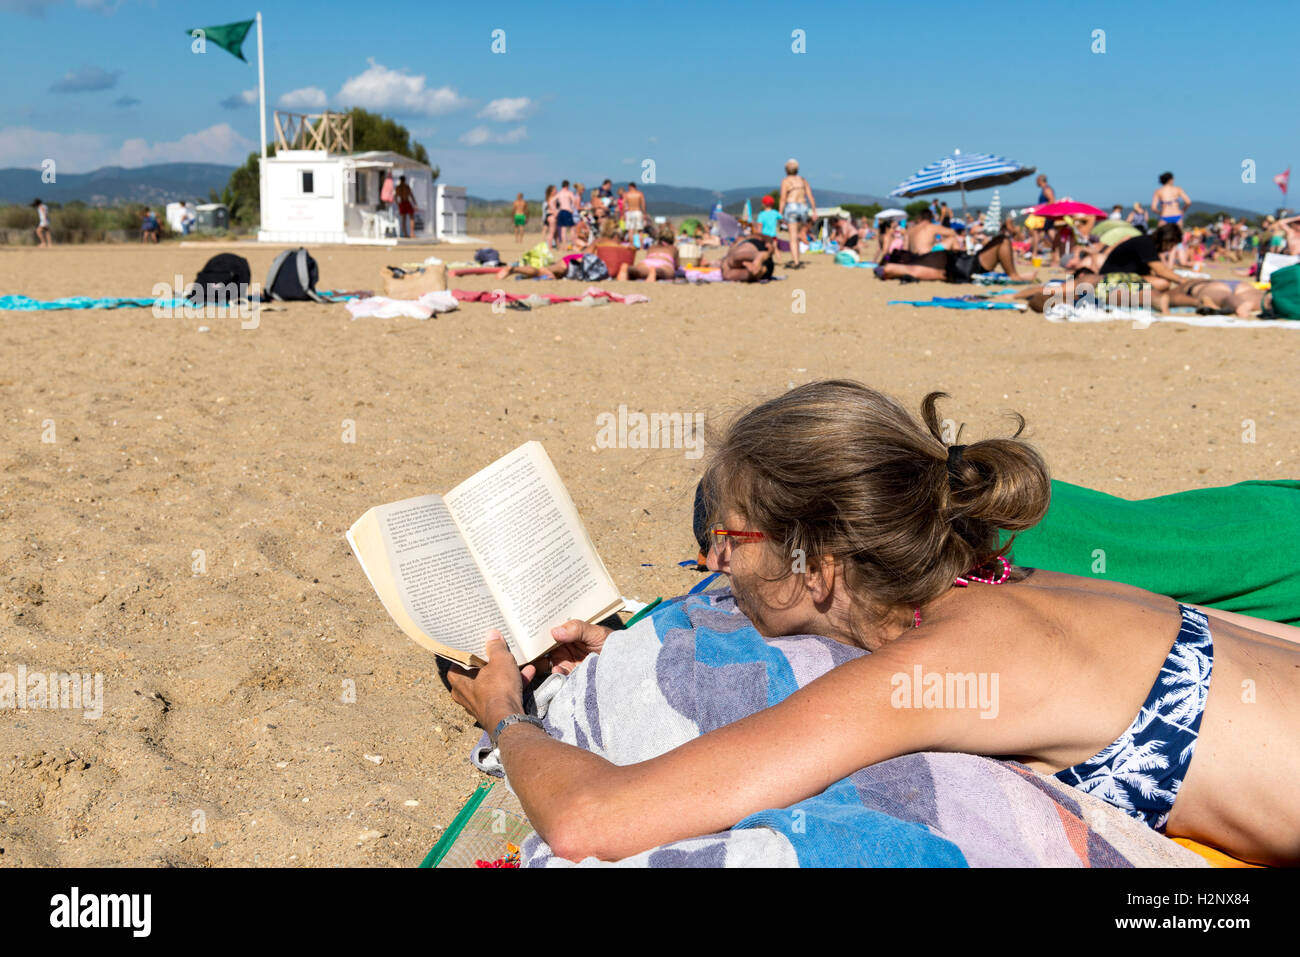 Woman lying on the beach reading a book, closeup, Plage des Salins, Hyeres, Côte d'Azur, France Stock Photo